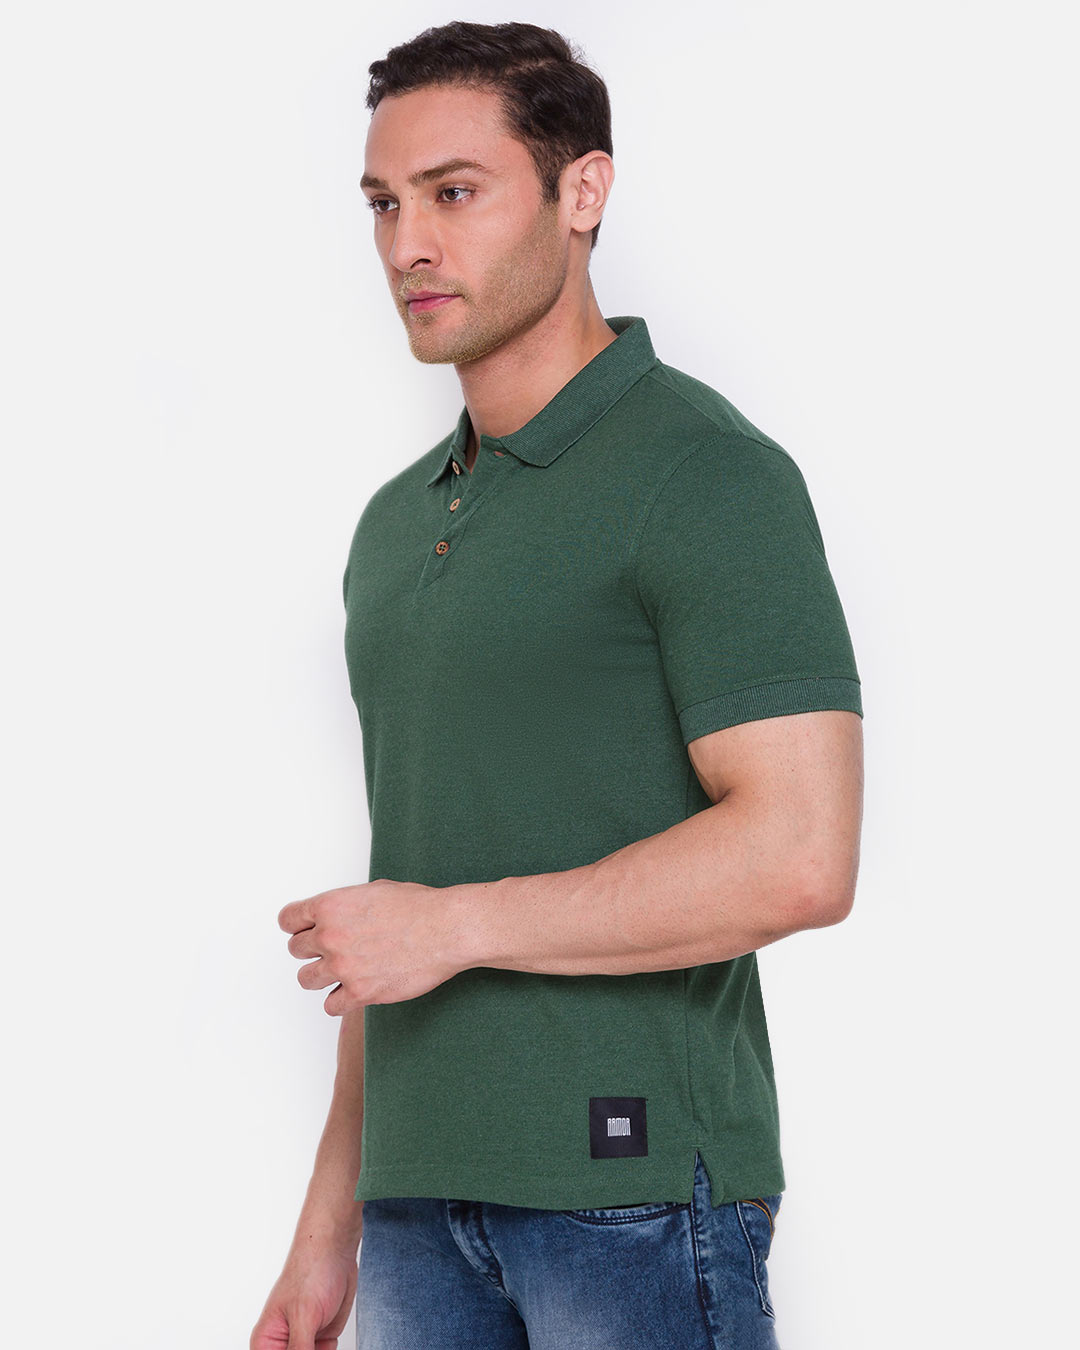 Shop Inc. Men's Armor Polo T-Shirt Green-Back